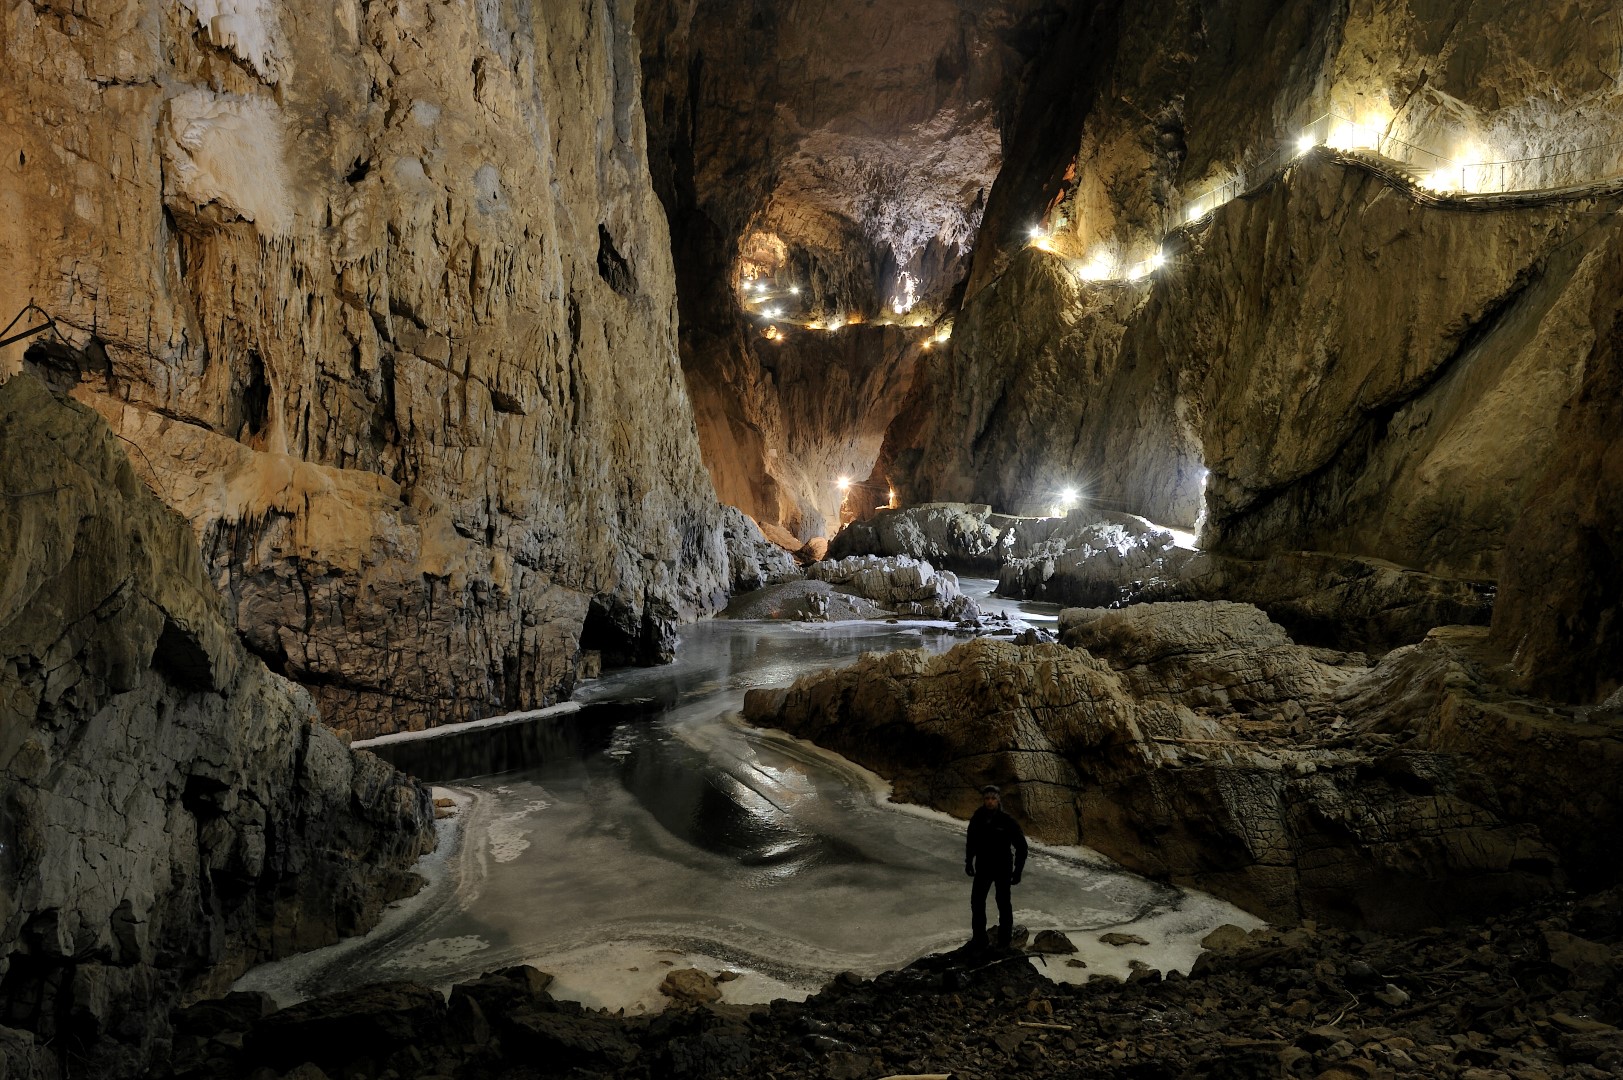 Il Parco delle grotte di Škocjan